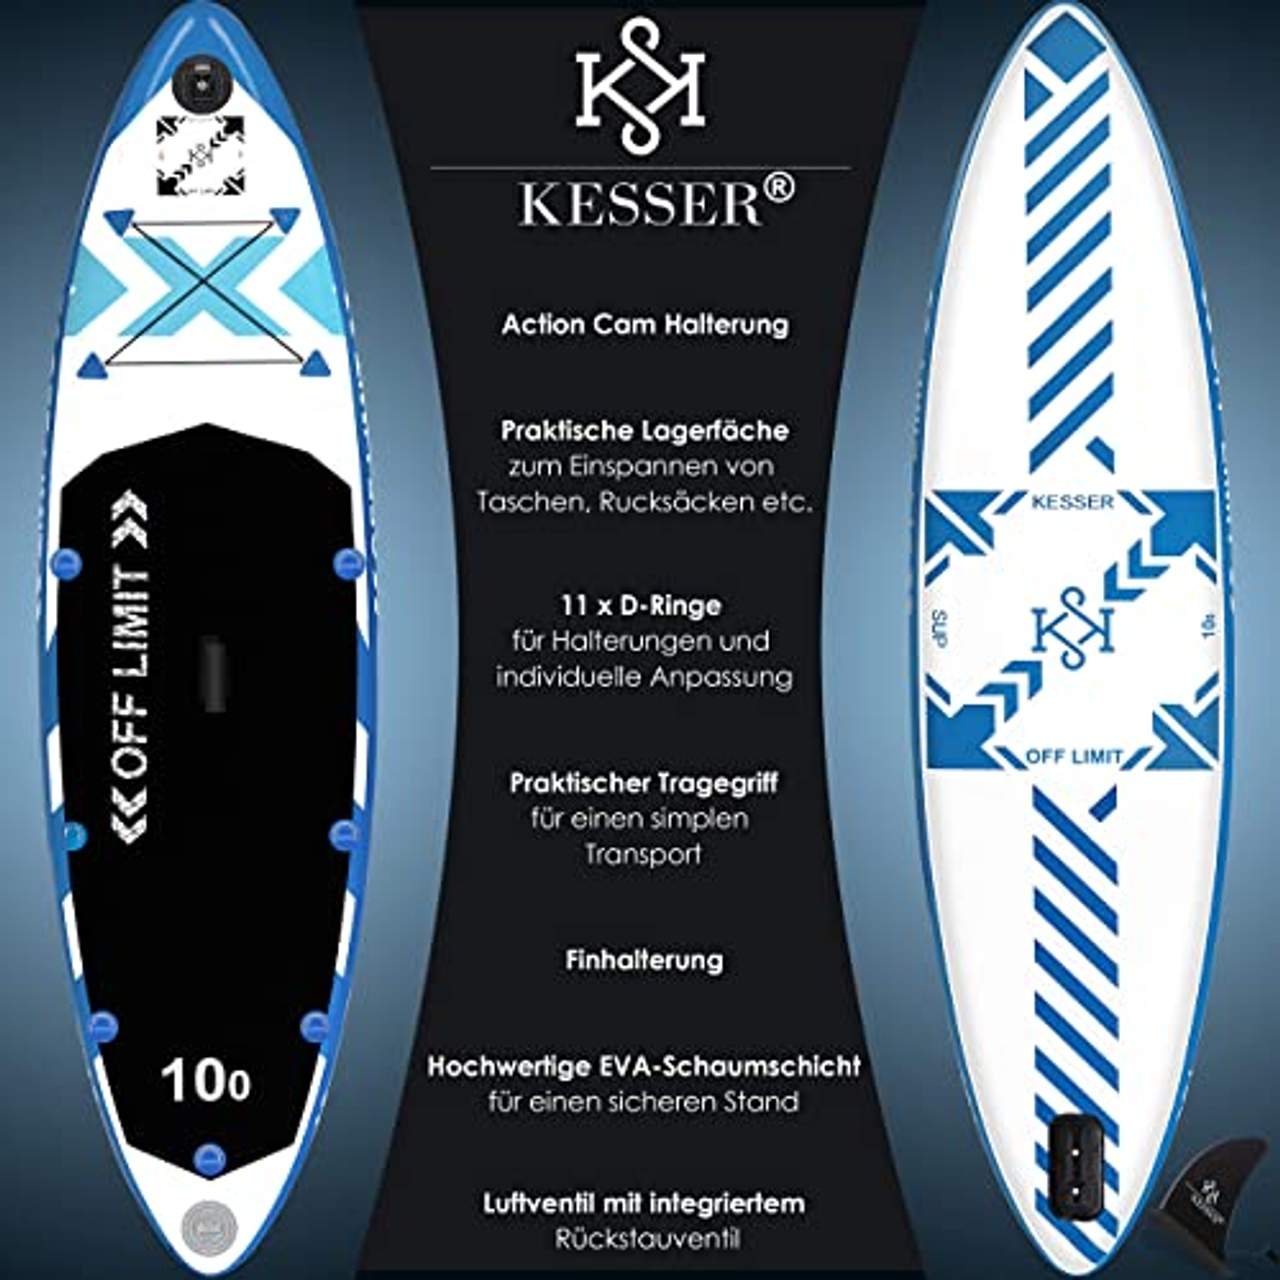 KESSER Aufblasbares SUP Board Set Stand Up Paddle Board Premium Surfboard